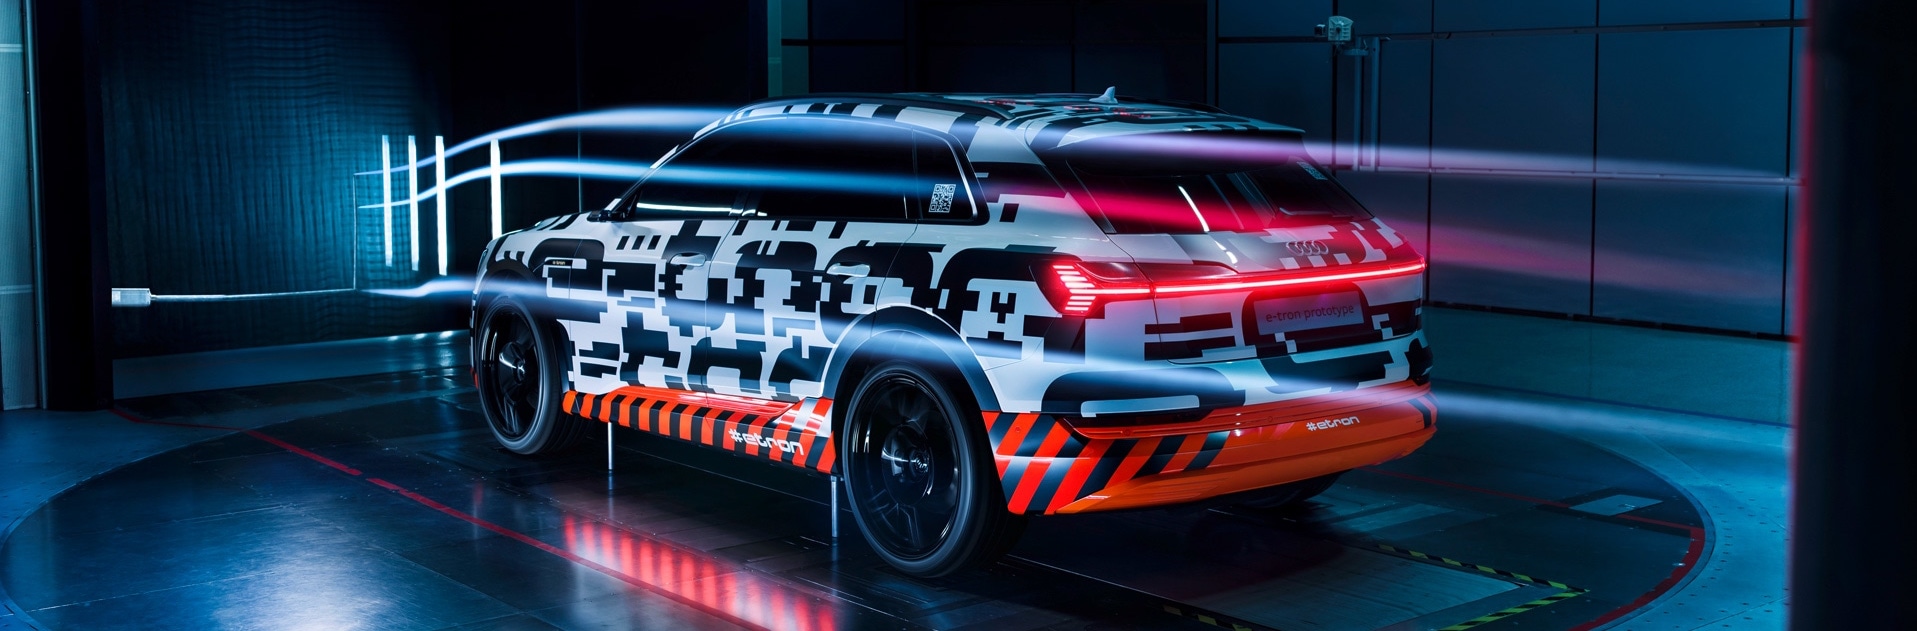 Prototip vozila Audi e-tron postavljen v vetrovni tunel